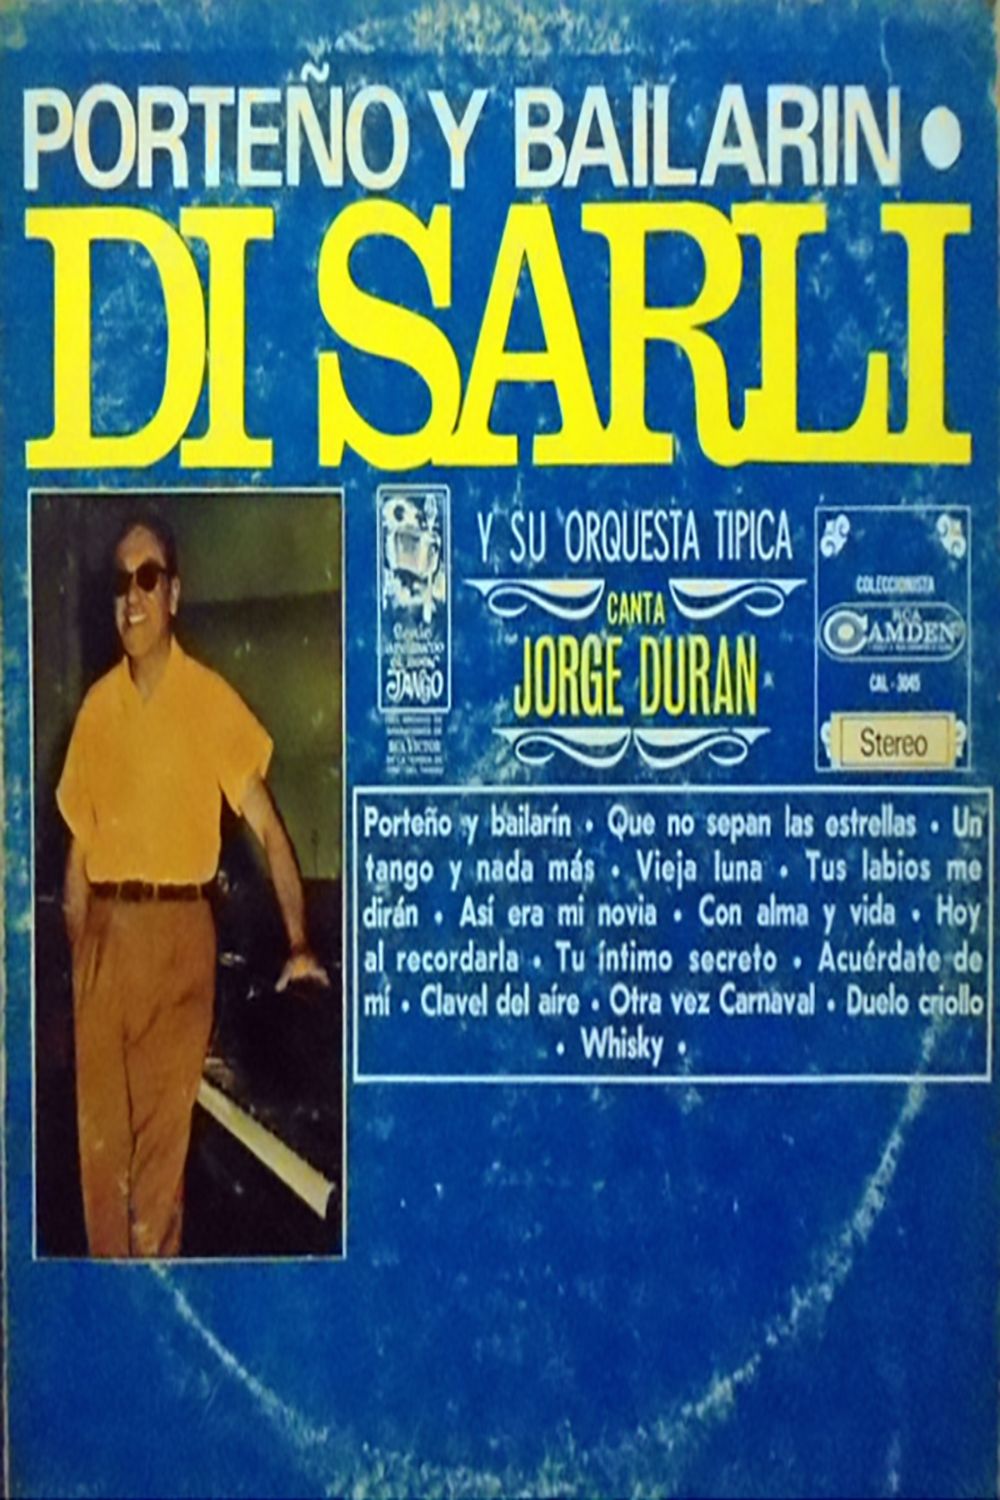 "Porteño y bailarín", Argentine Tango vinyl disc cover.